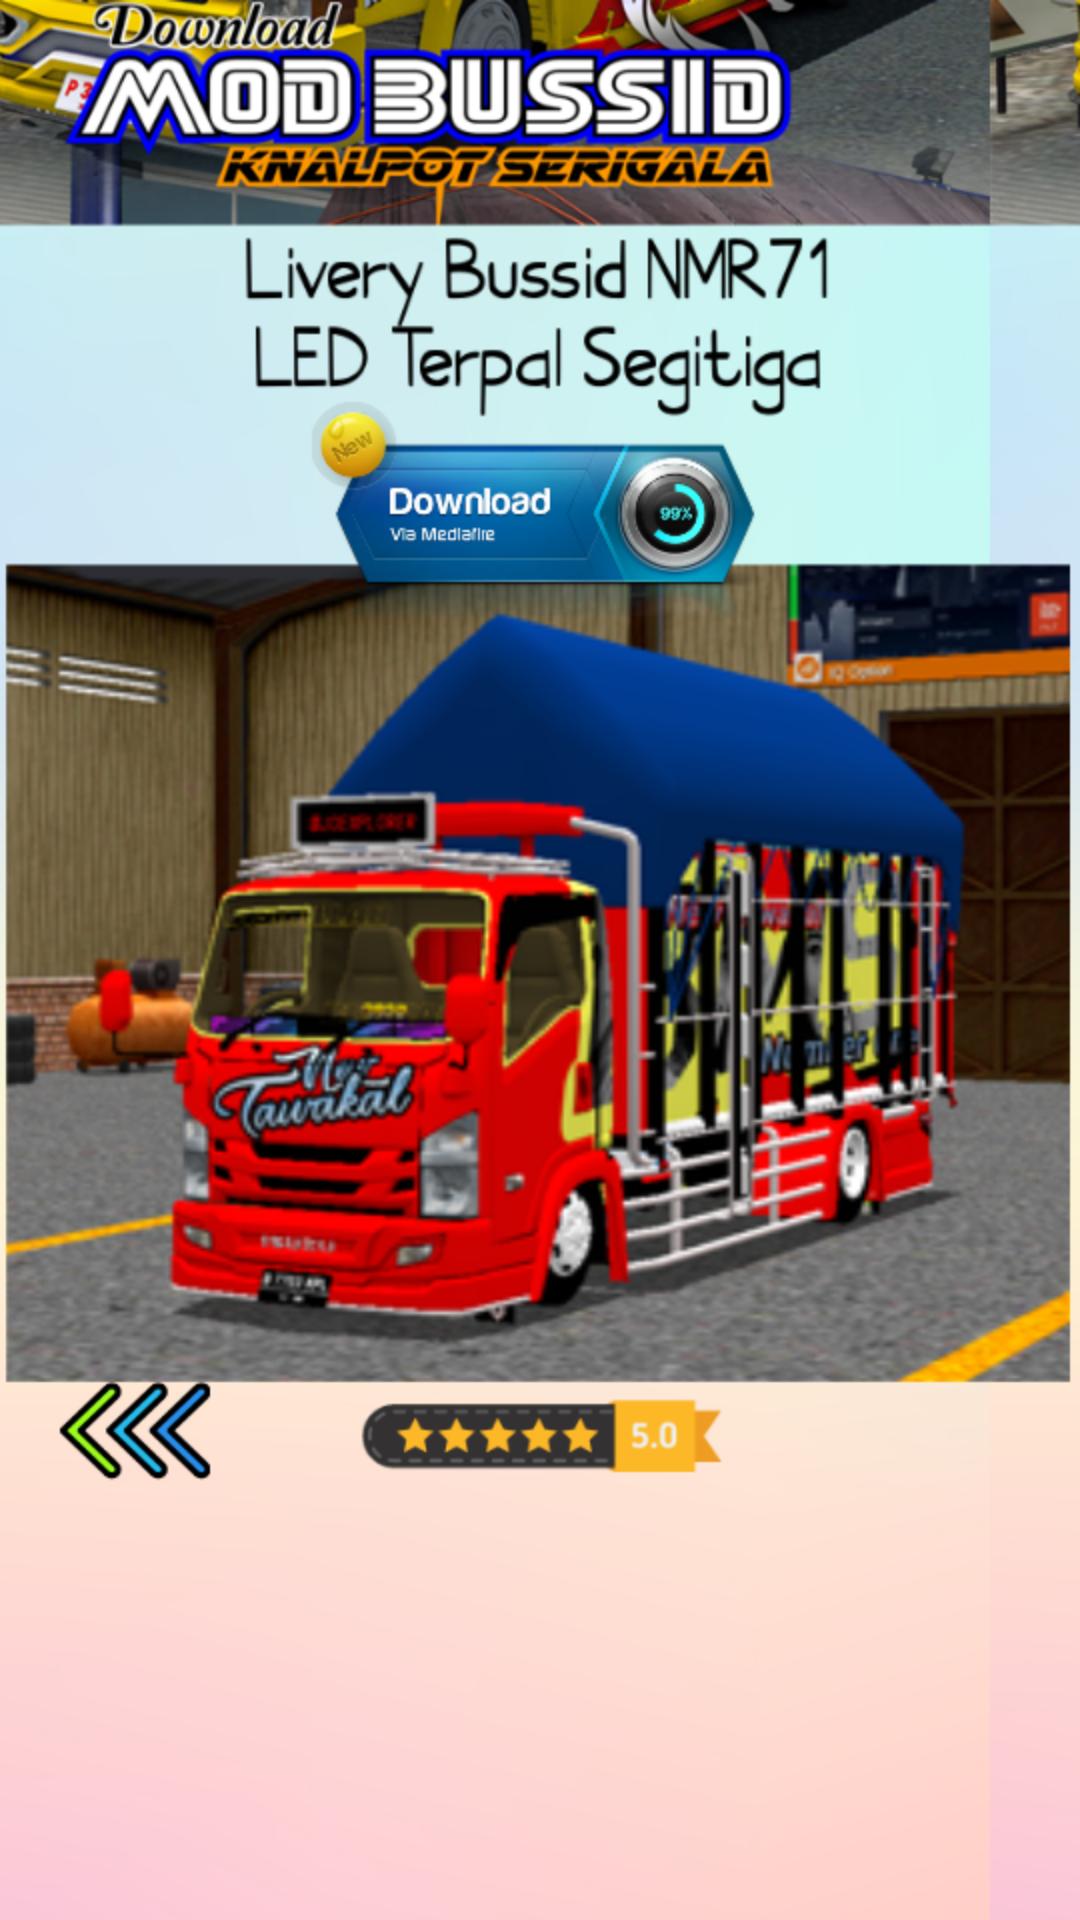 Download Mod Bussid Knalpot Serigala 1.0 Screenshot 6